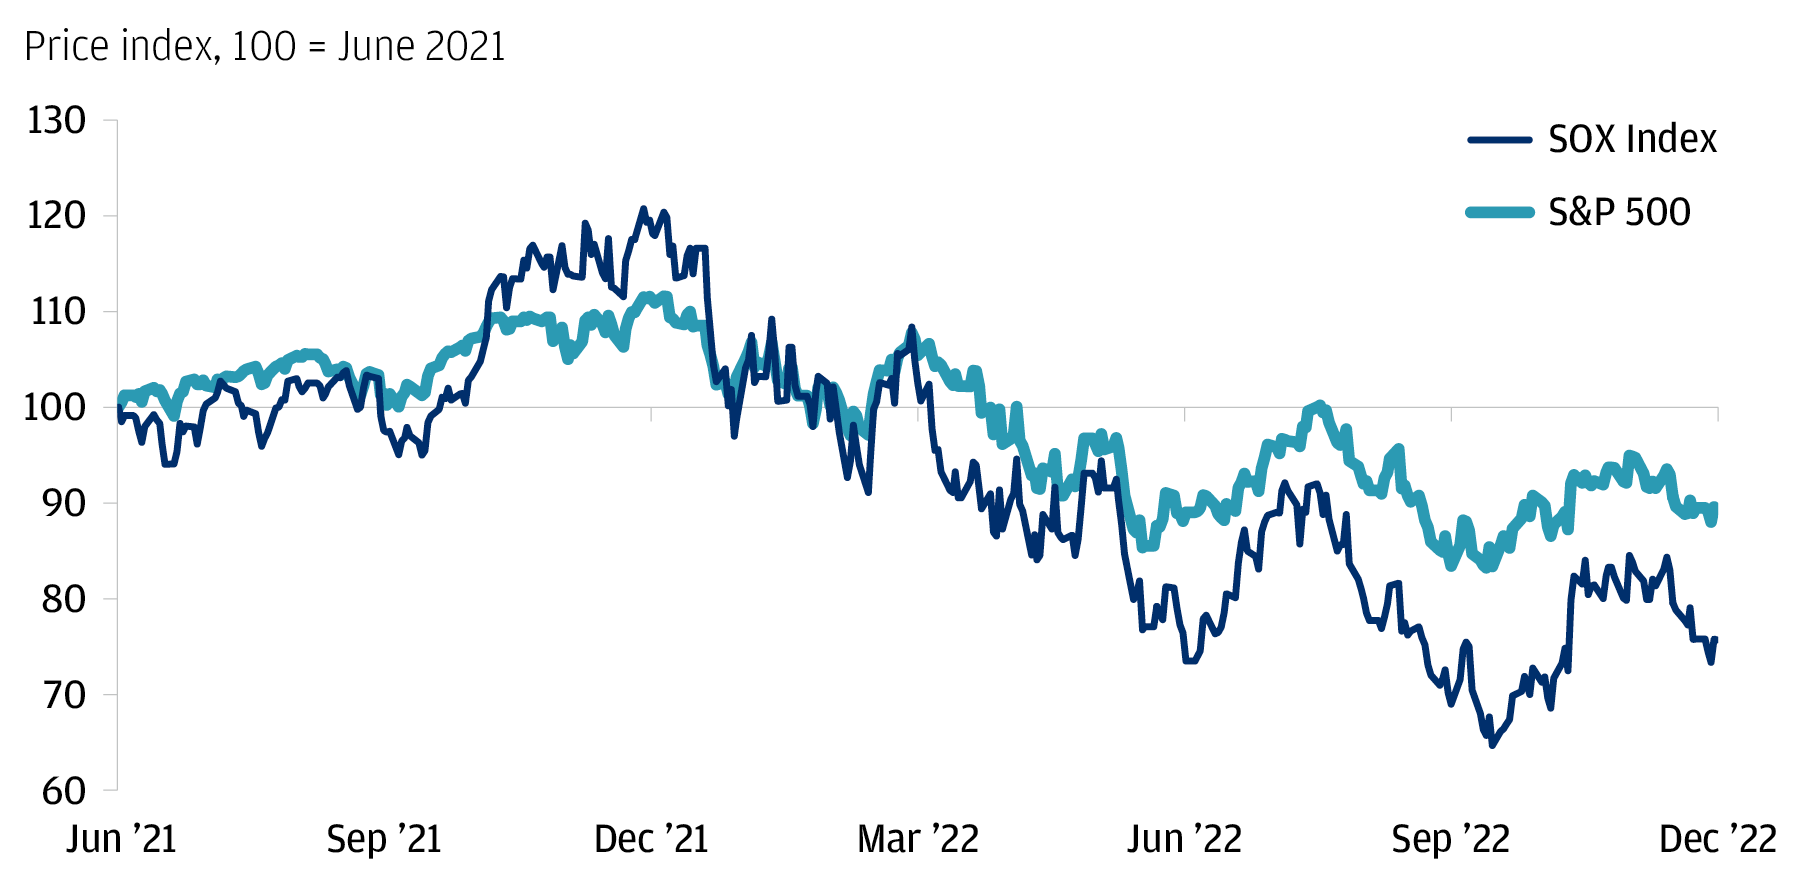 Semiconductor stock performance vs. S&P 500 